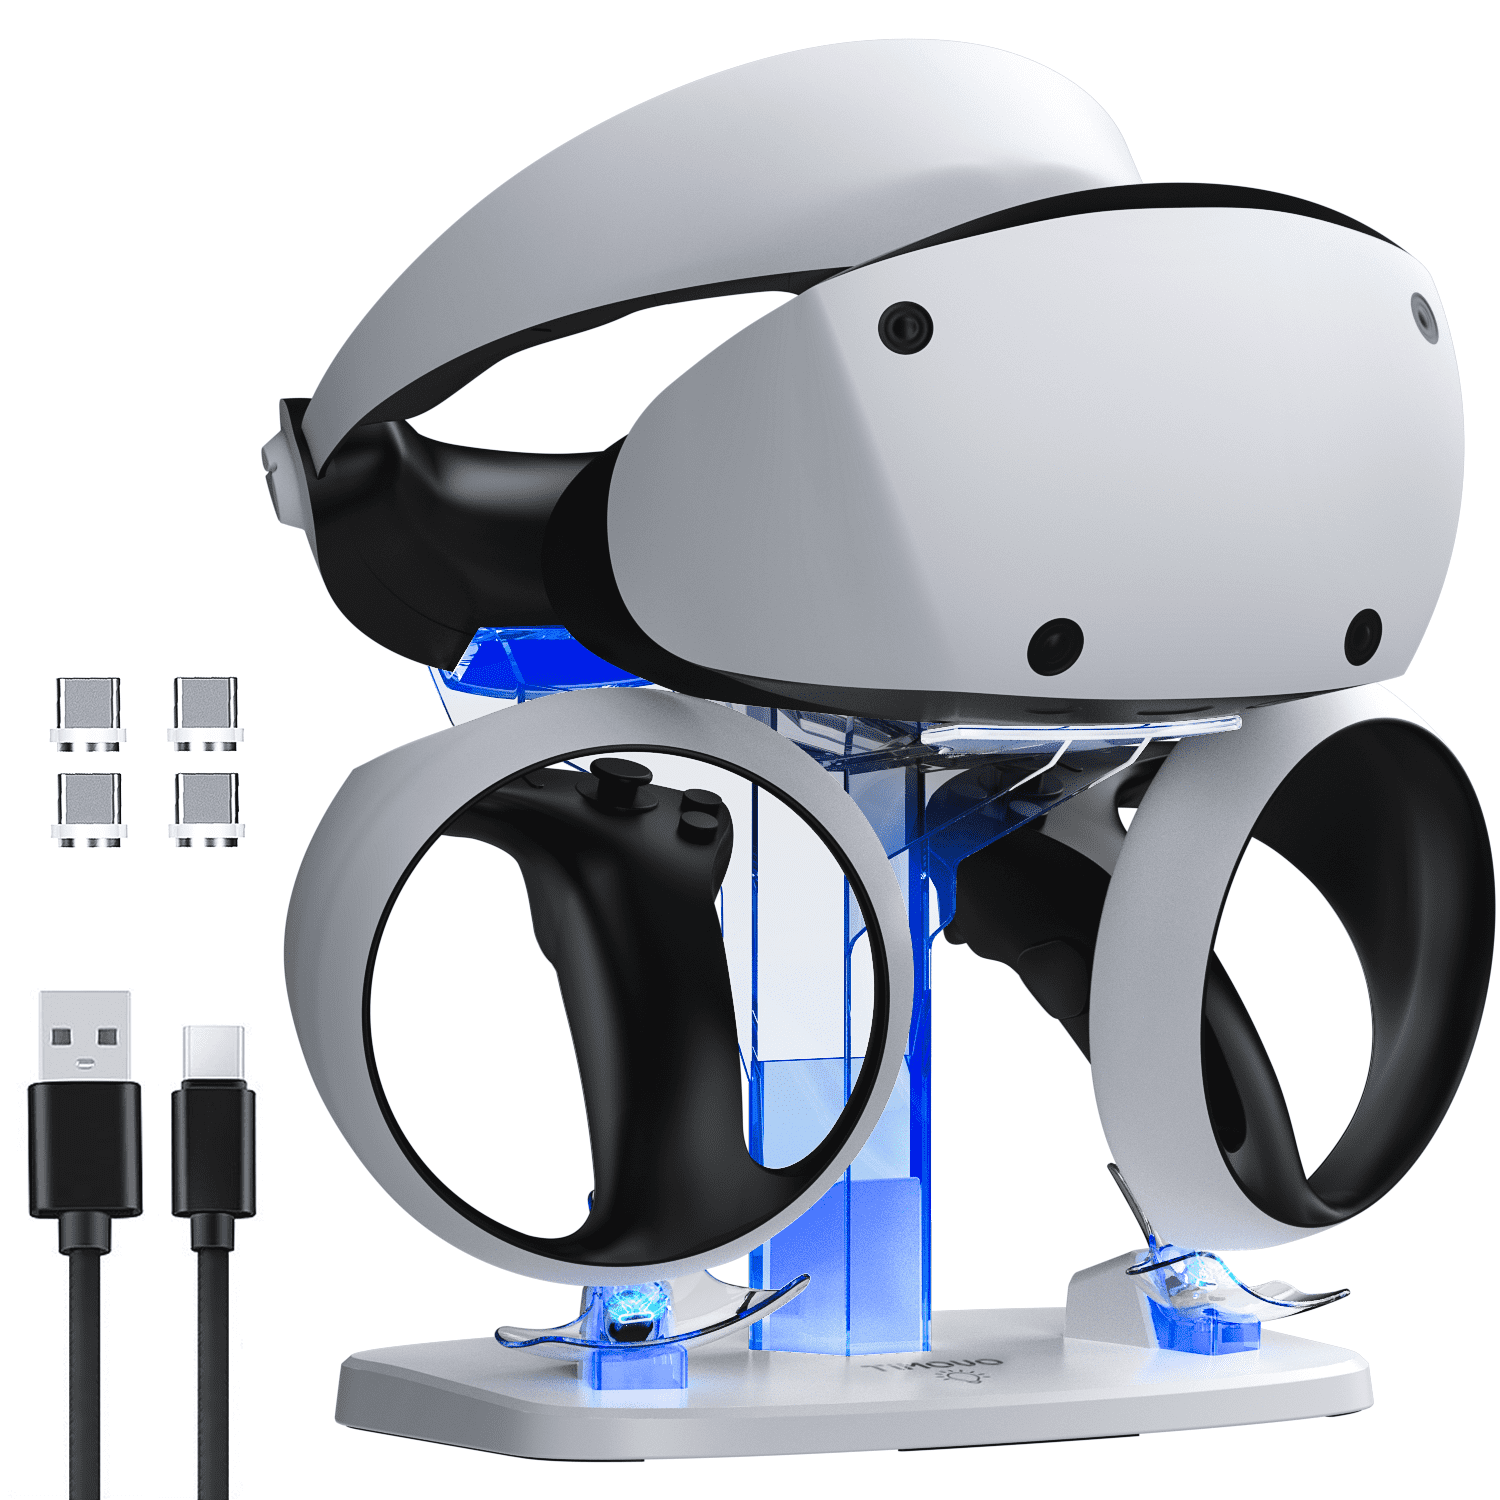 PlayStation VR2 Headset 